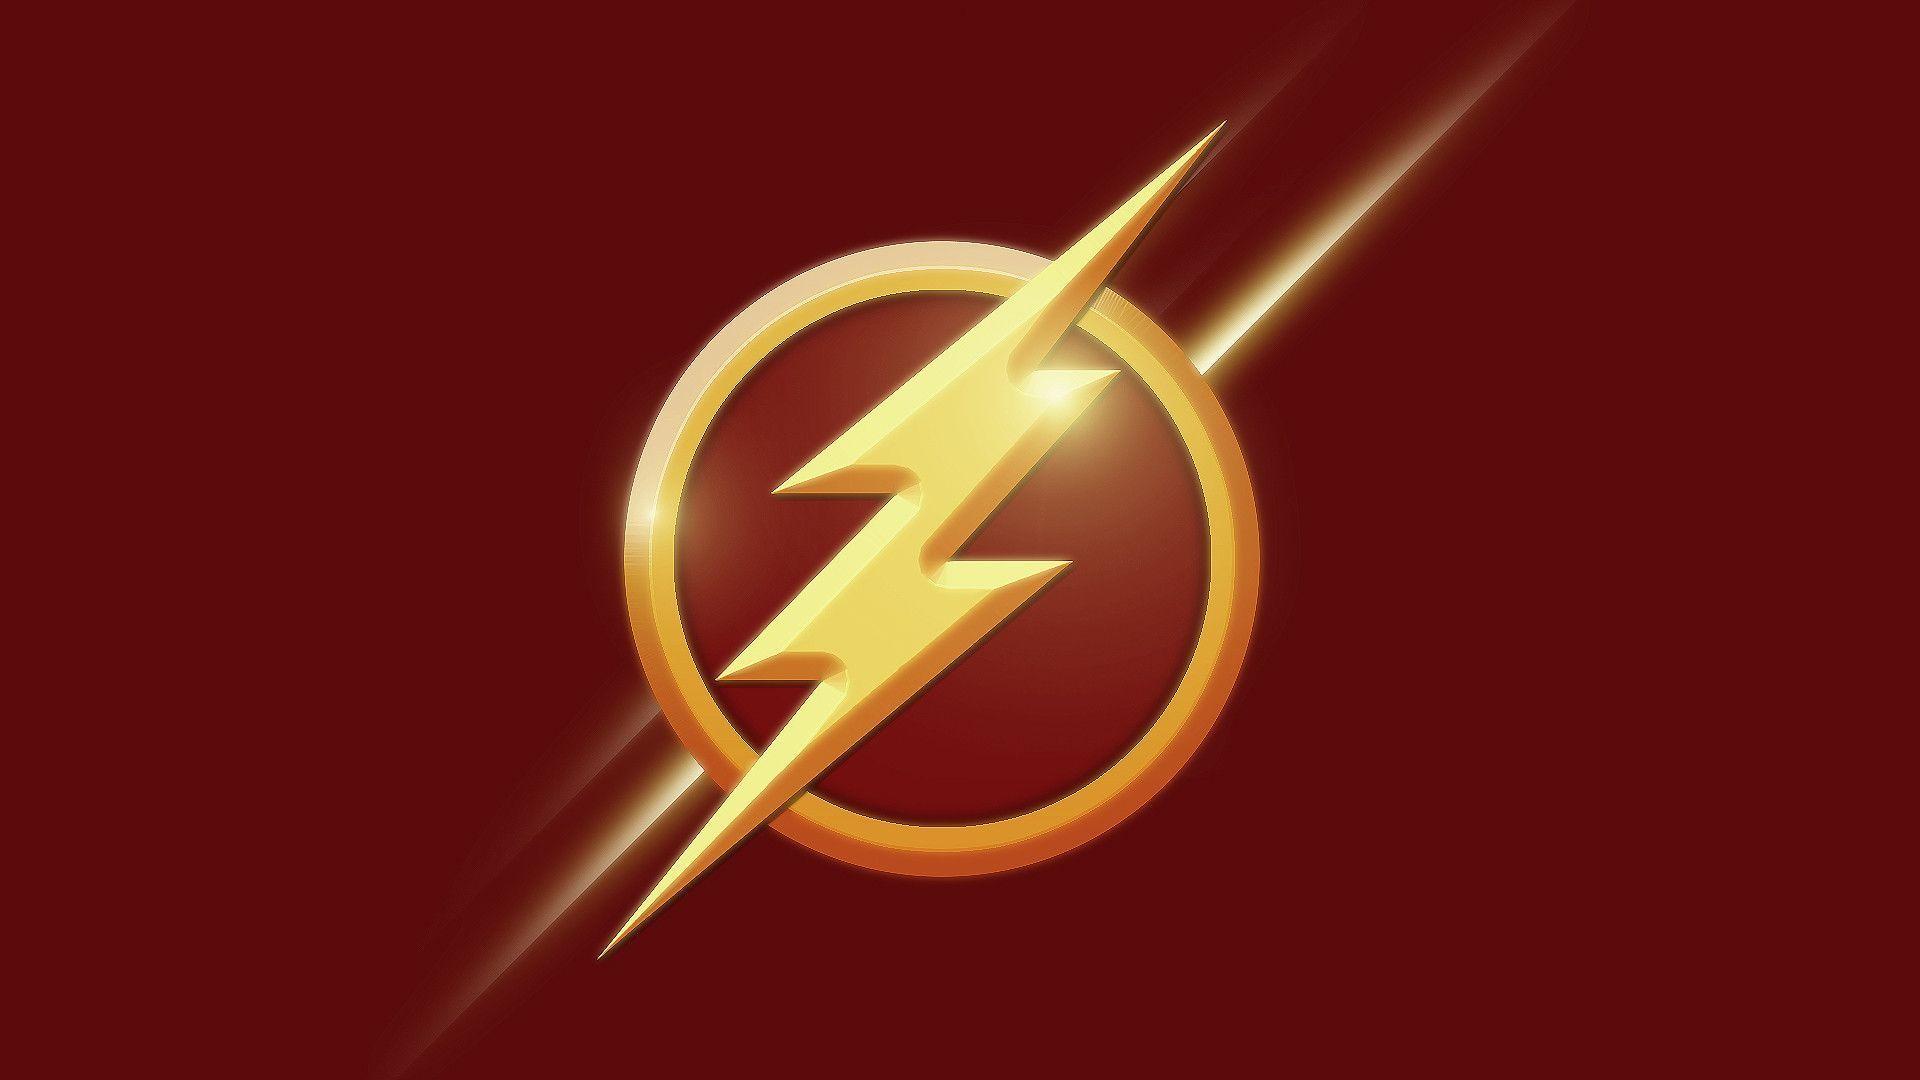 The Flash CW Wallpaper HD